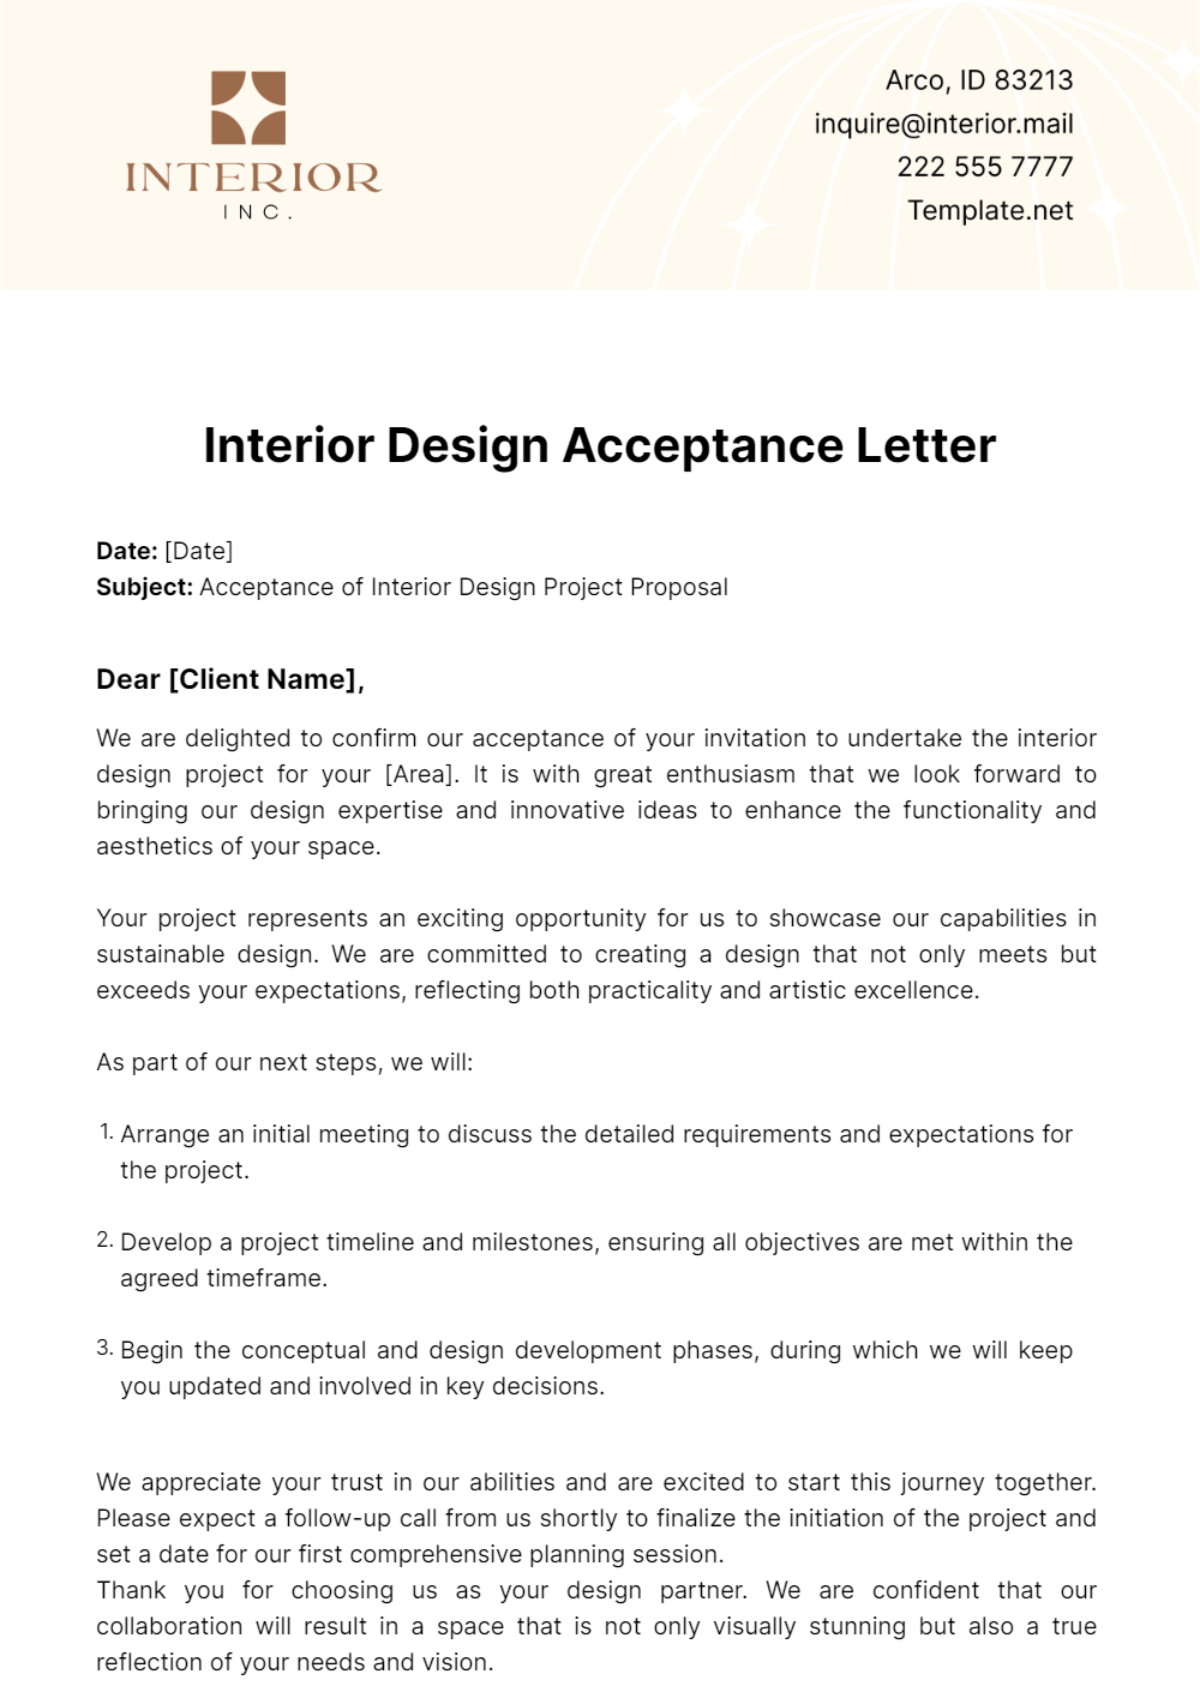 Interior Design Acceptance Letter Template